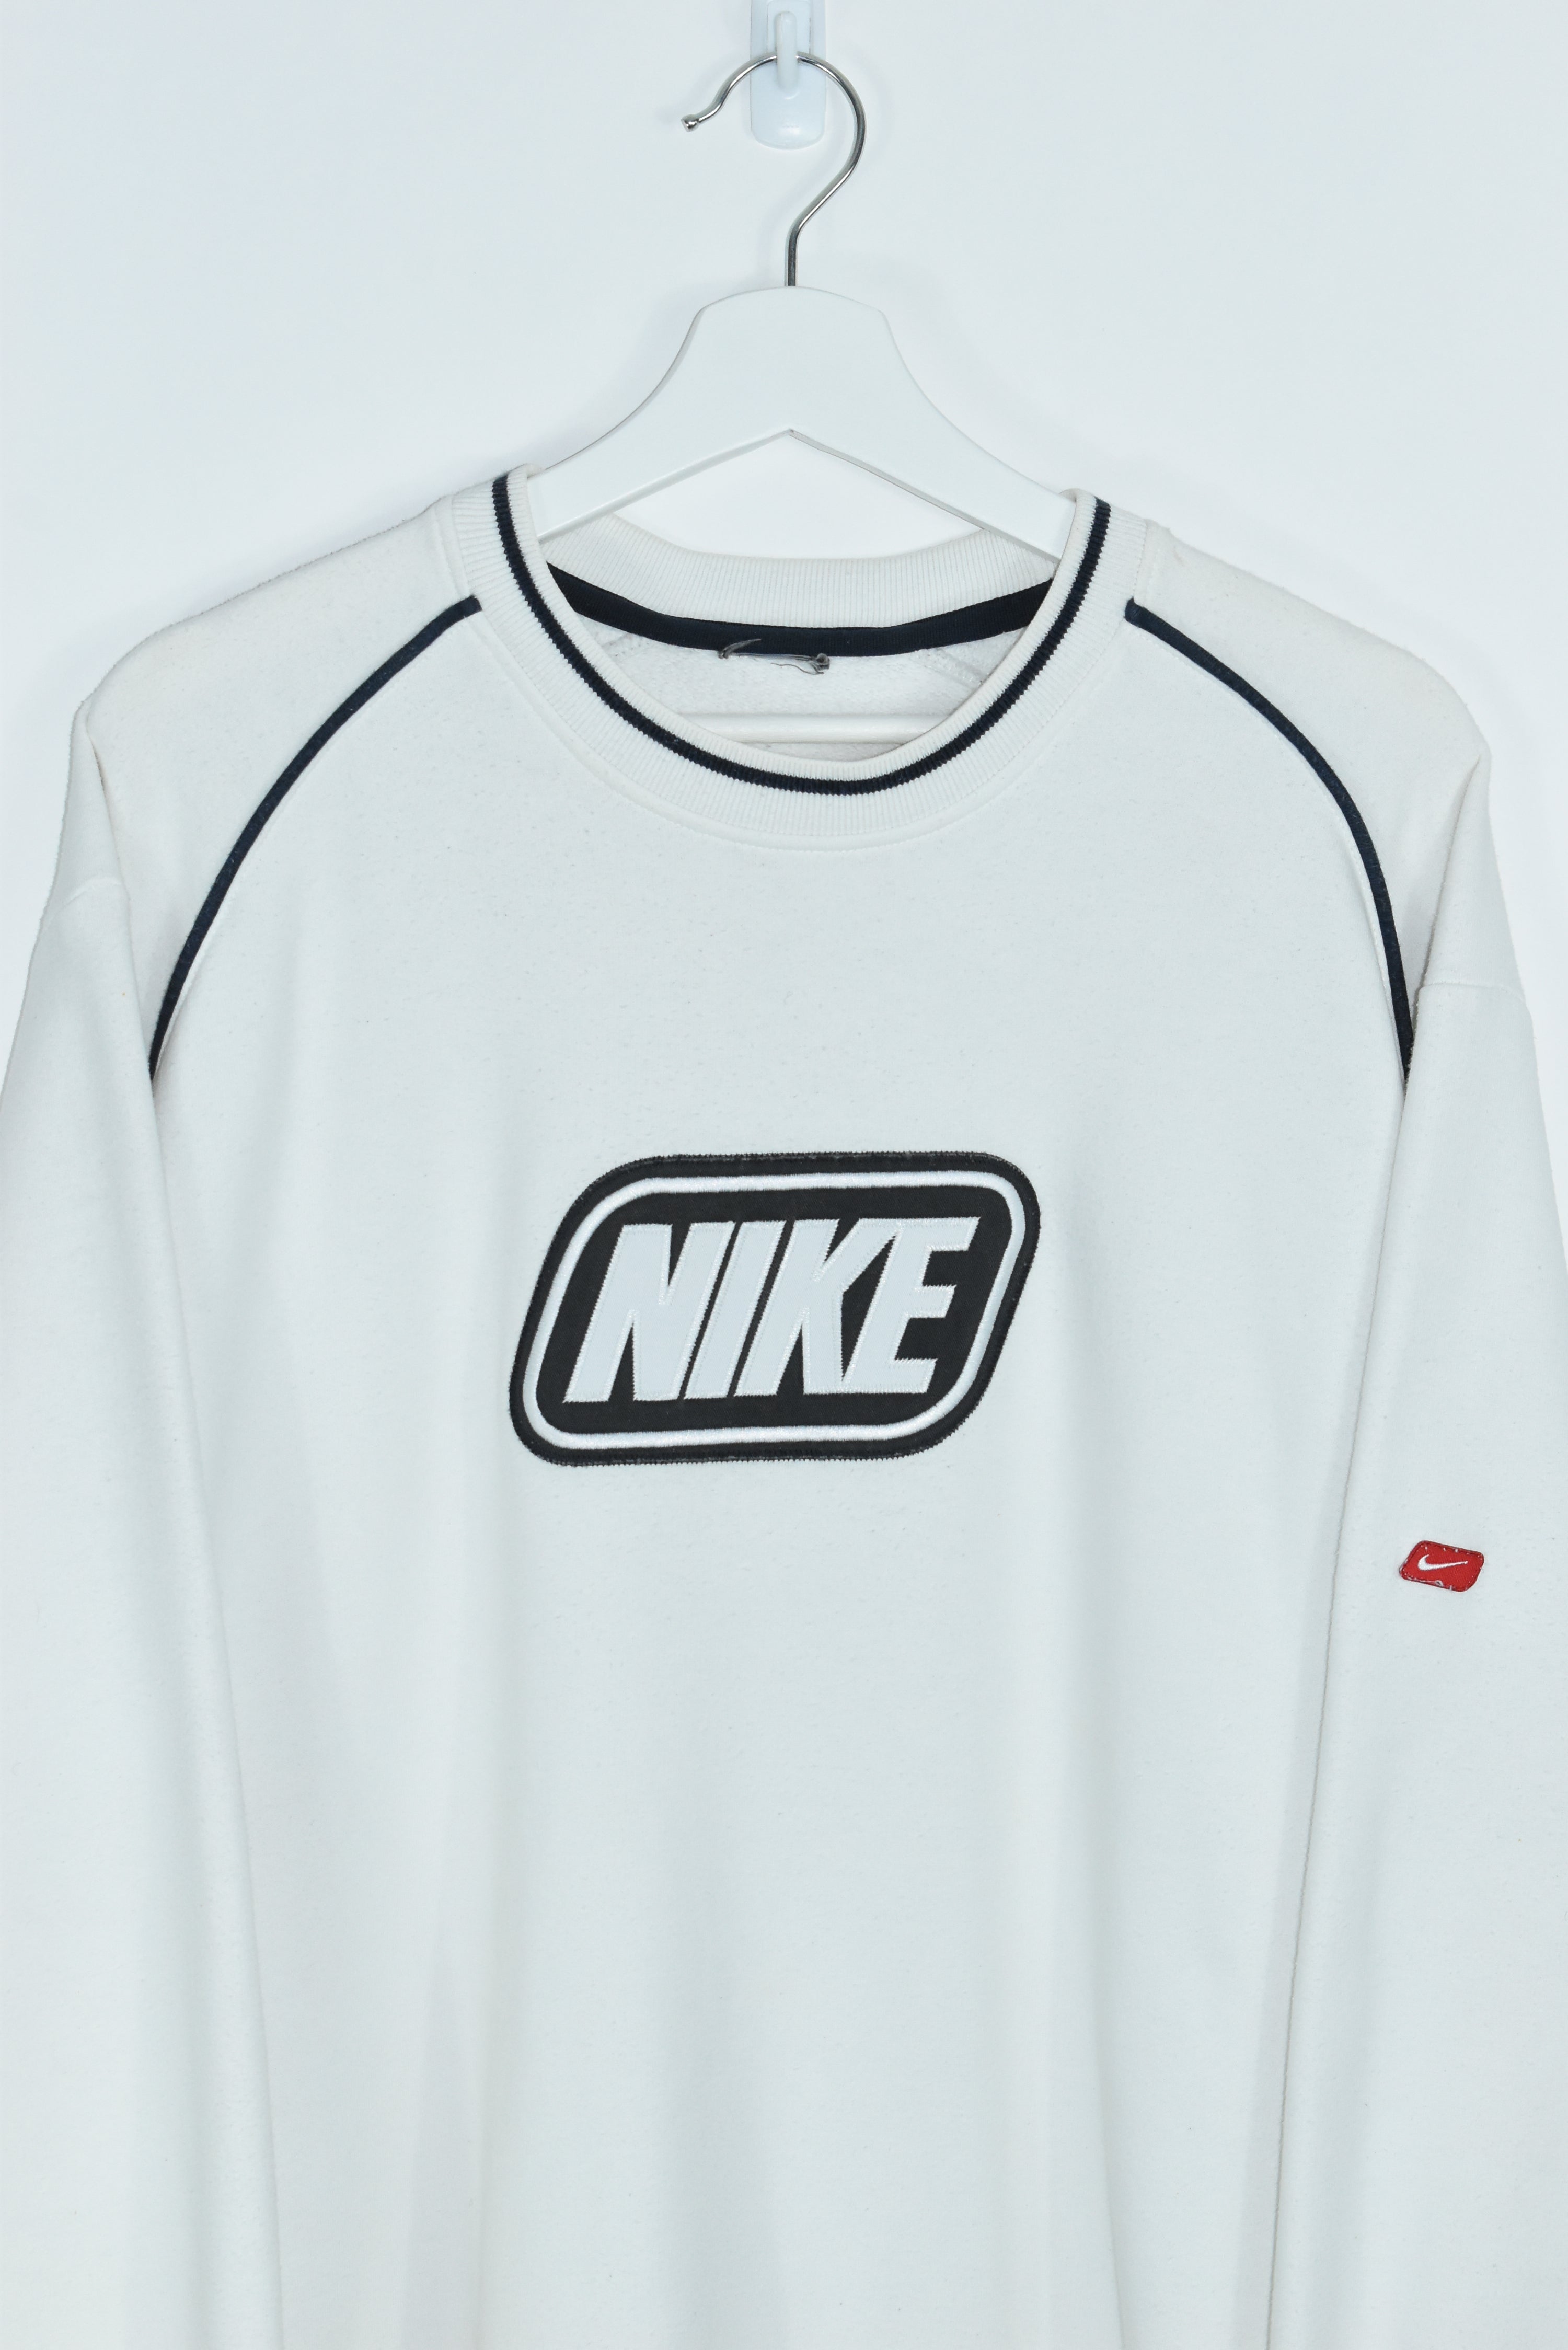 Vintage Nike Embroidery Sweatshirt XLARGE